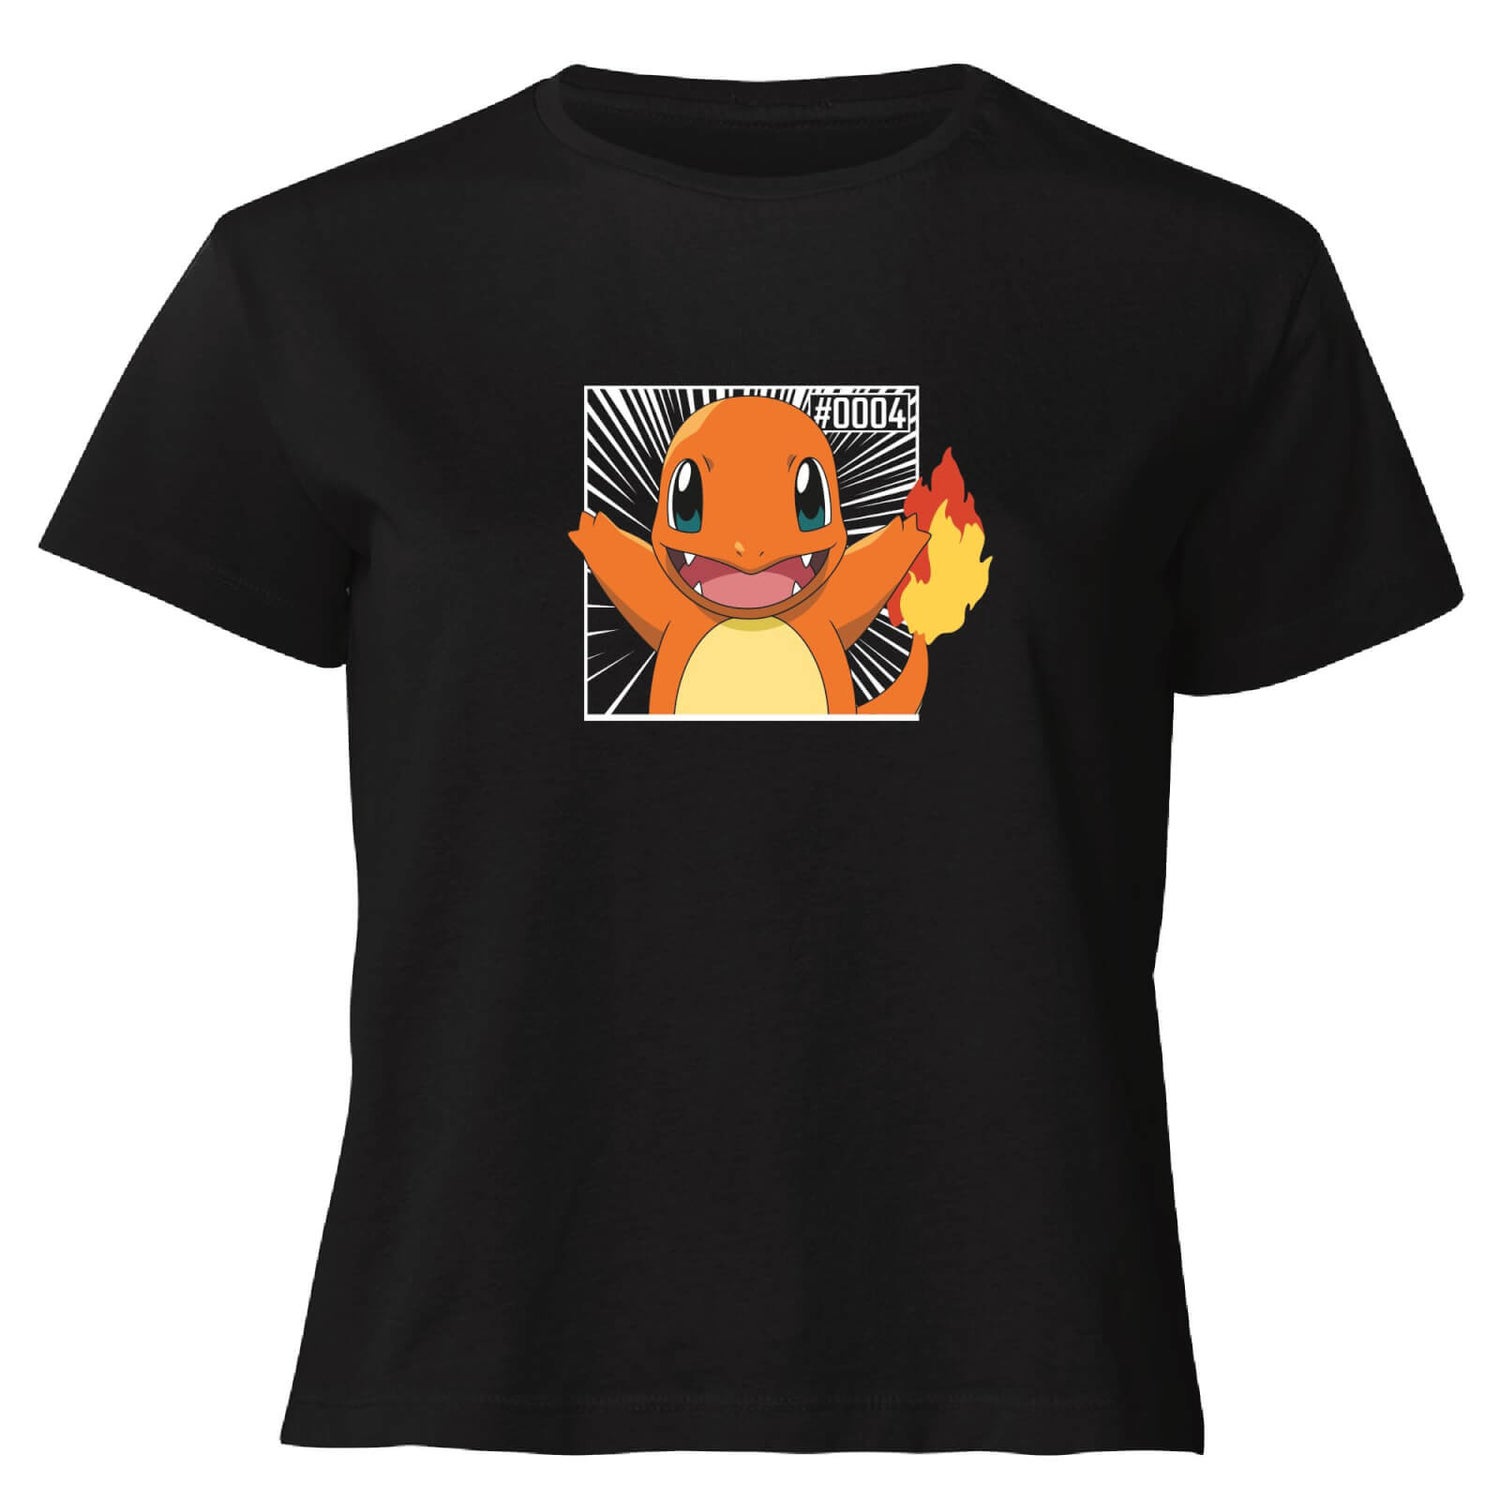 Pokémon Pokédex Charmander #0004 Women's Cropped T-Shirt - Black